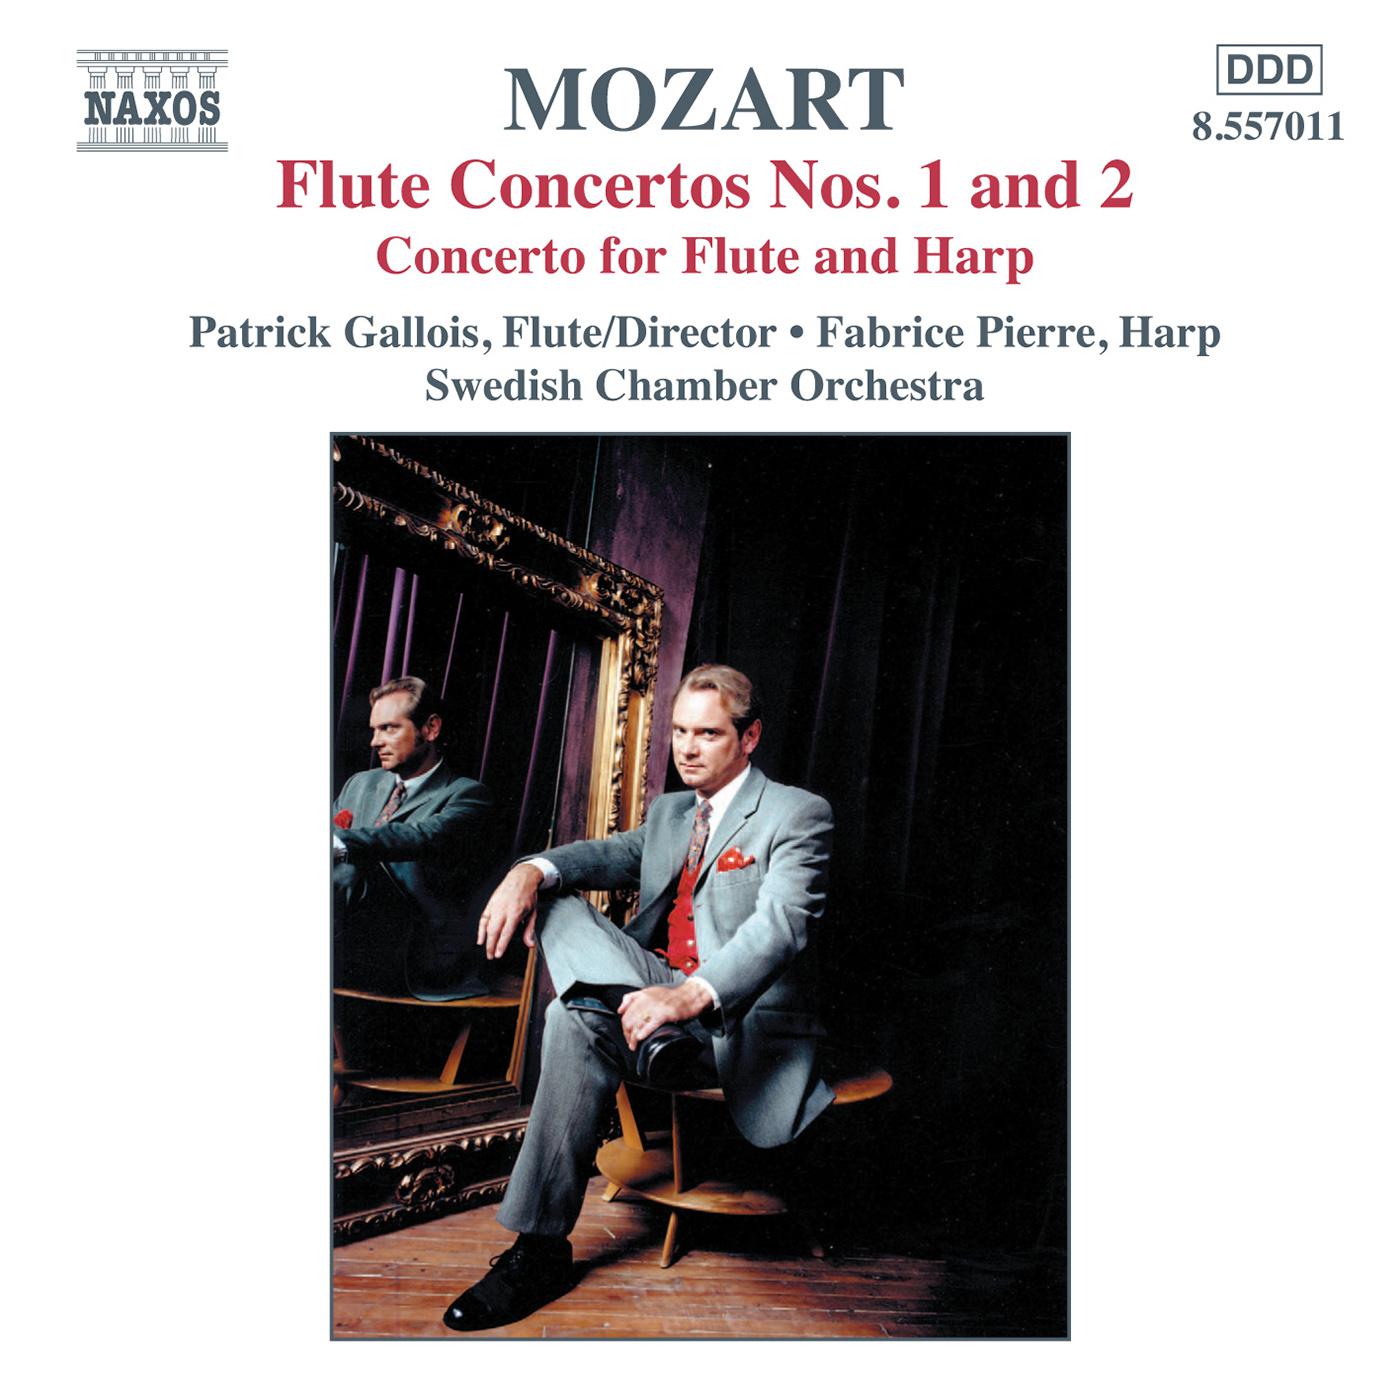 Concerto for Flute and Harp in C Major, K. 299: I. Allegro Concerto for Flute and Harp in C Major, K. 299